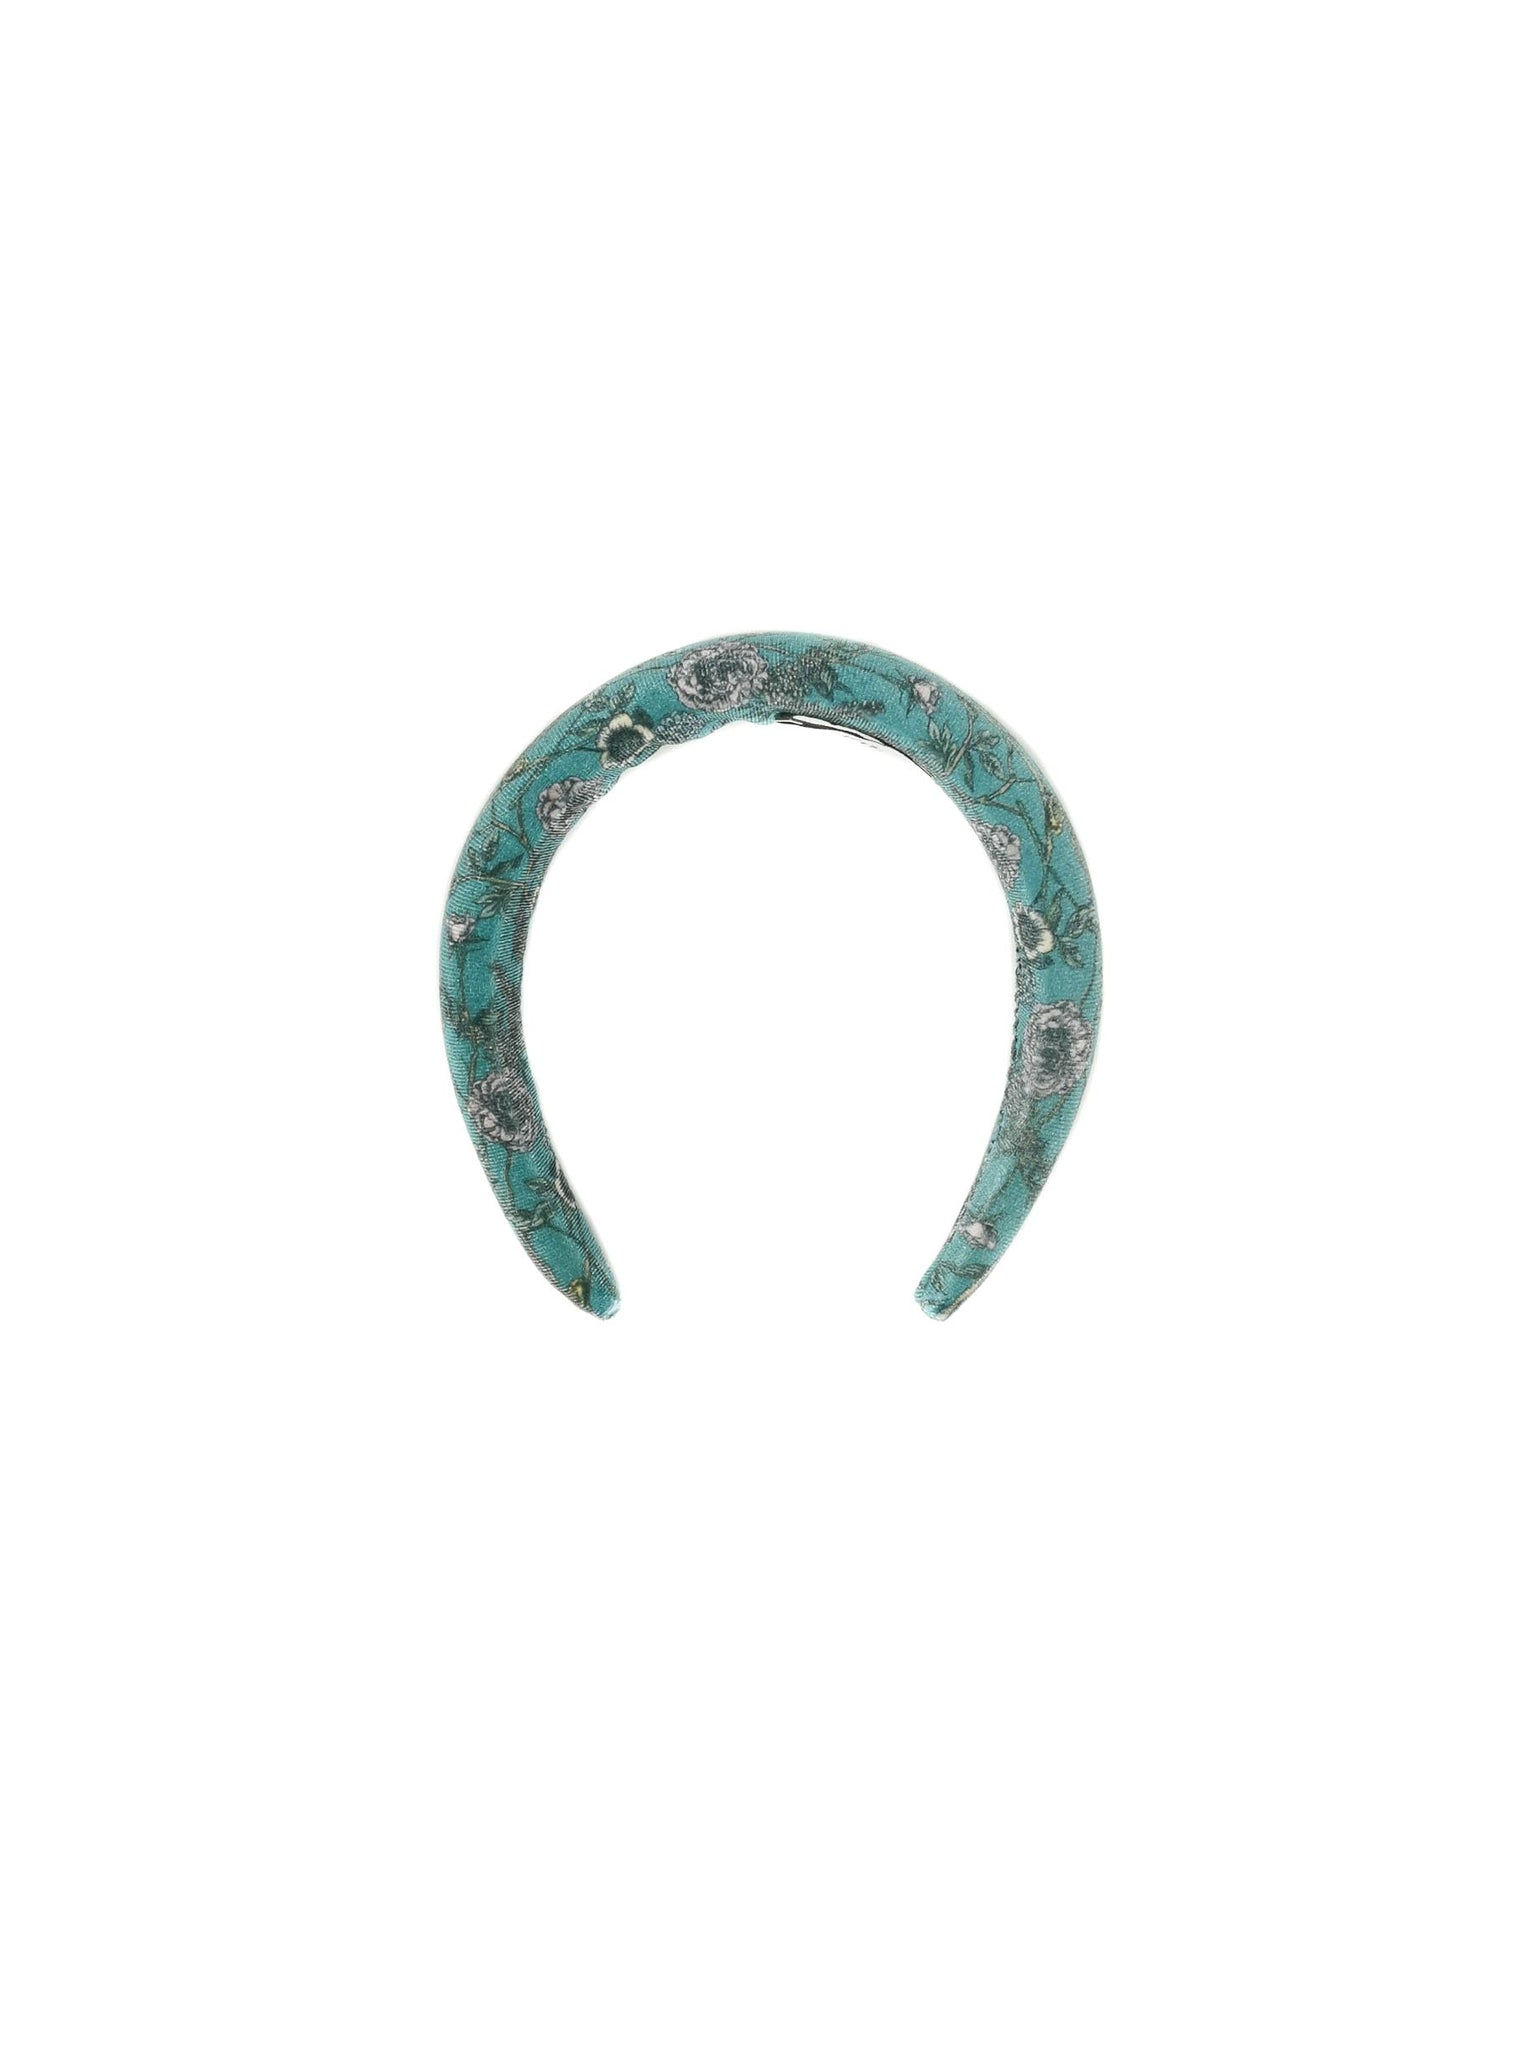 Padded velvet headband with bird pattern